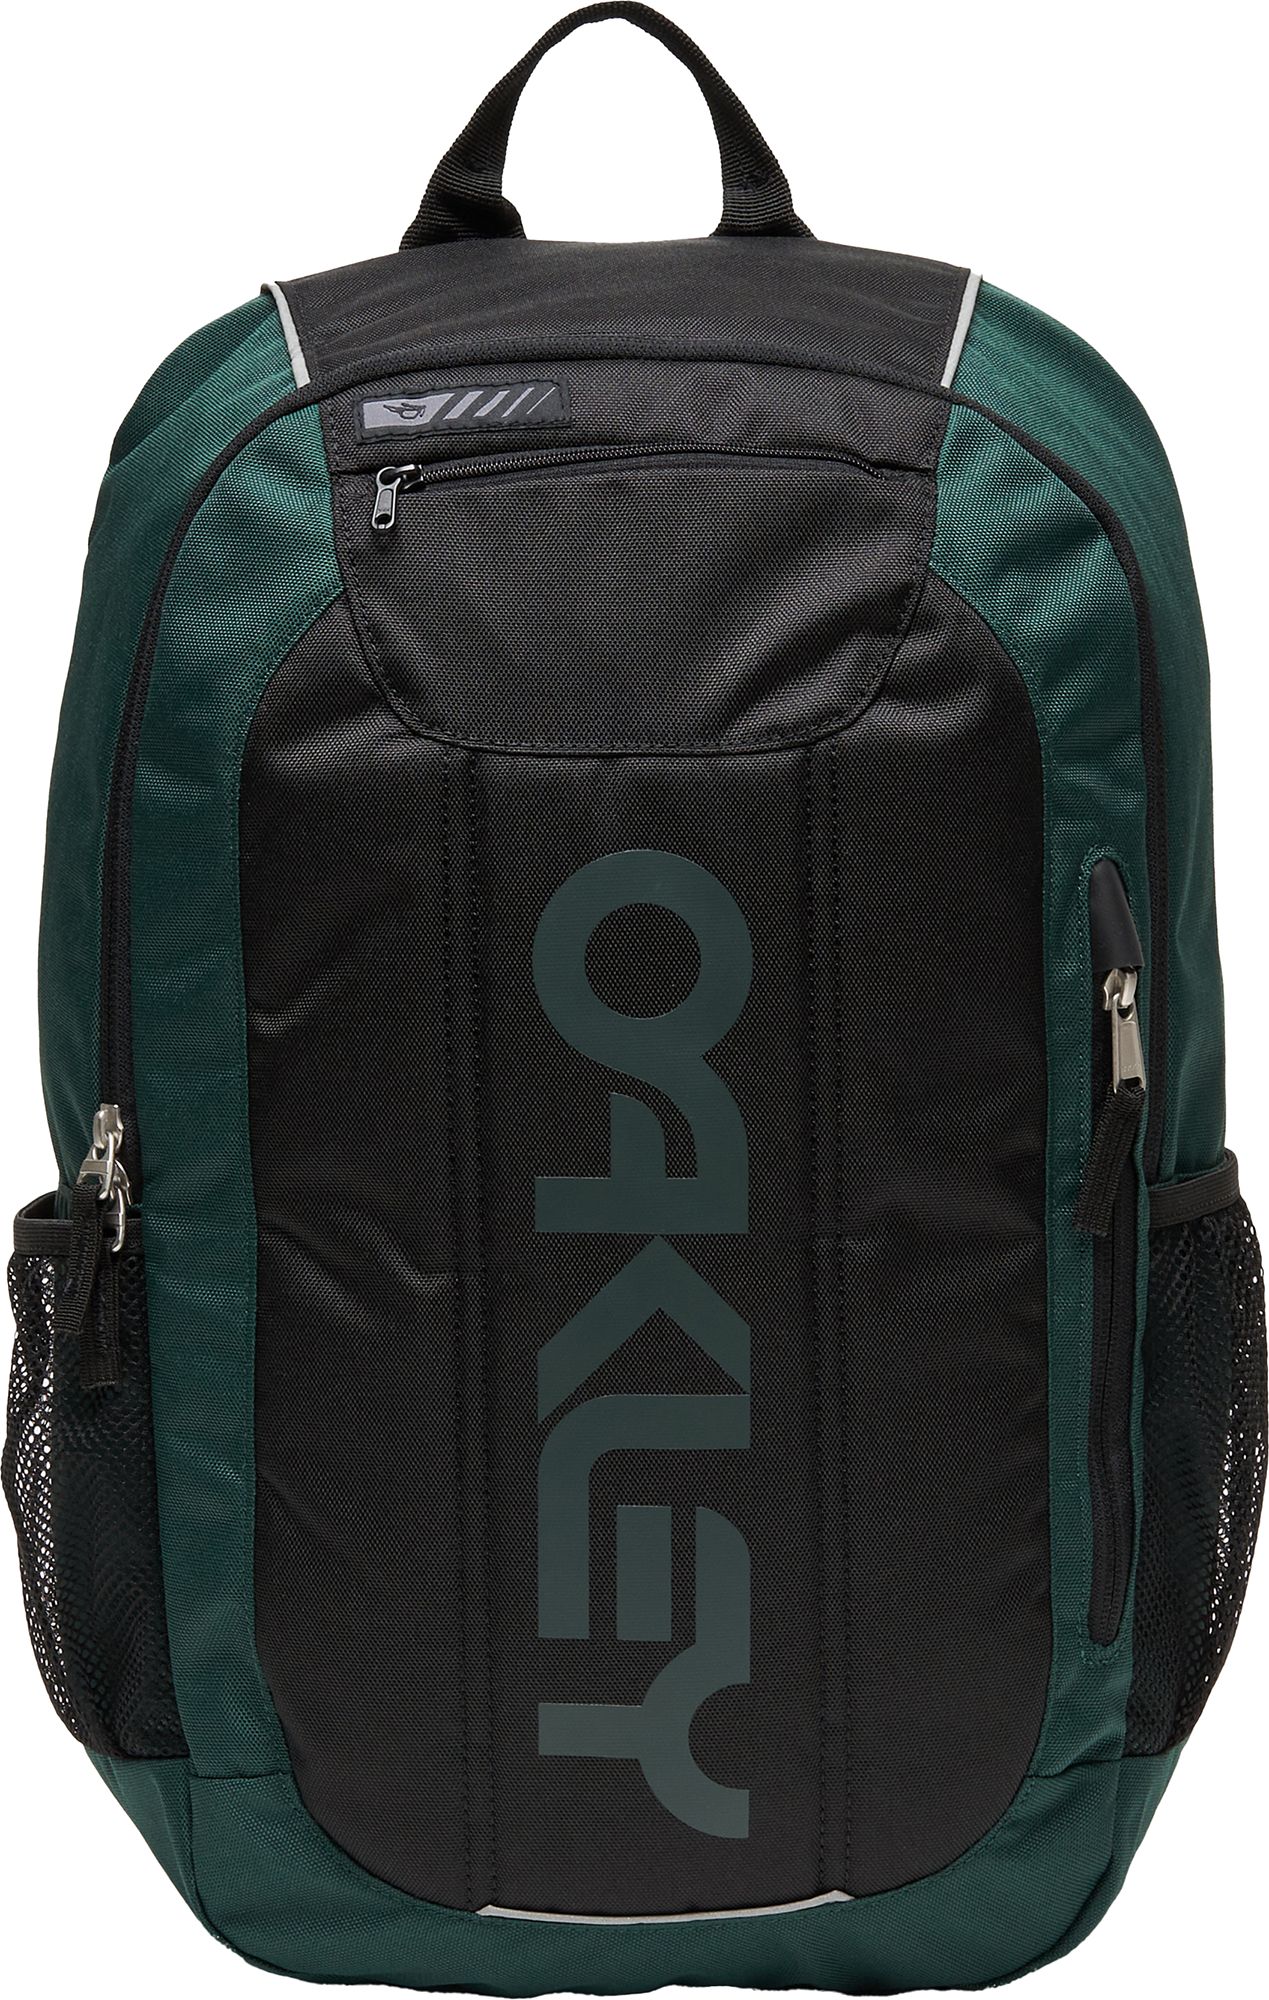 Oakley Enduro 3.0 20L Backpack